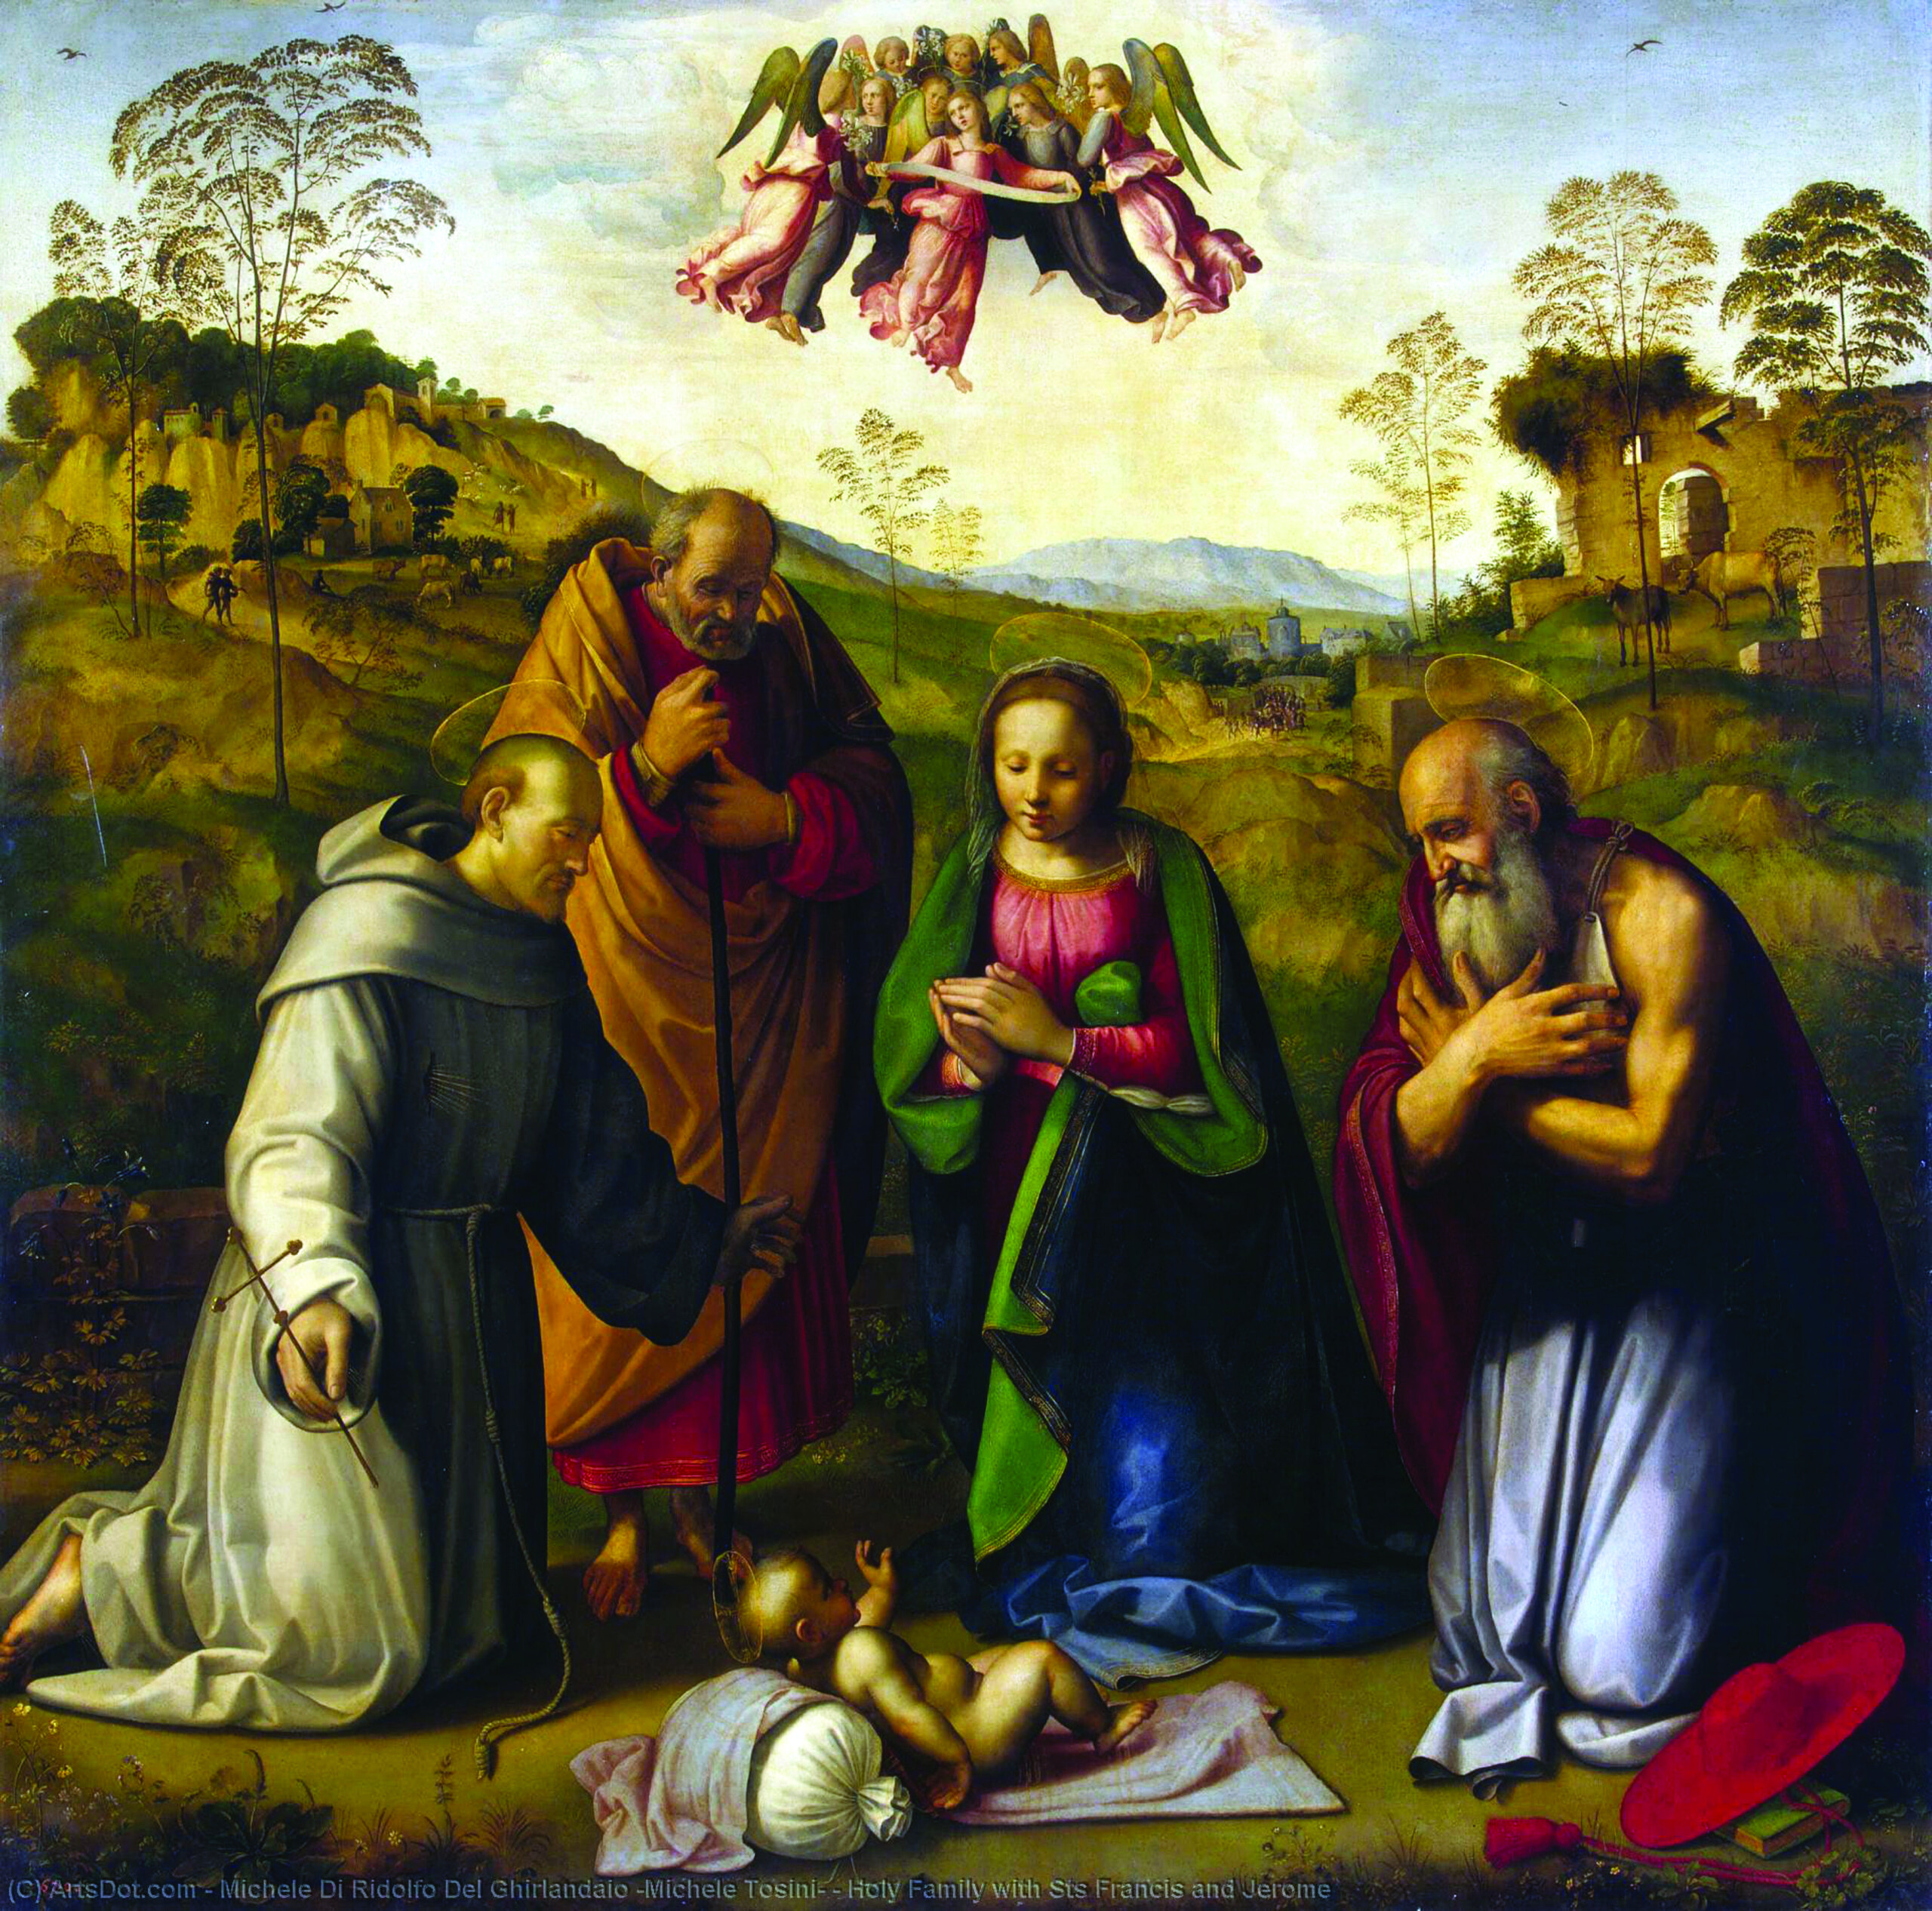 The Nativity of Jesus in the Summa of St. Thomas Aquinas